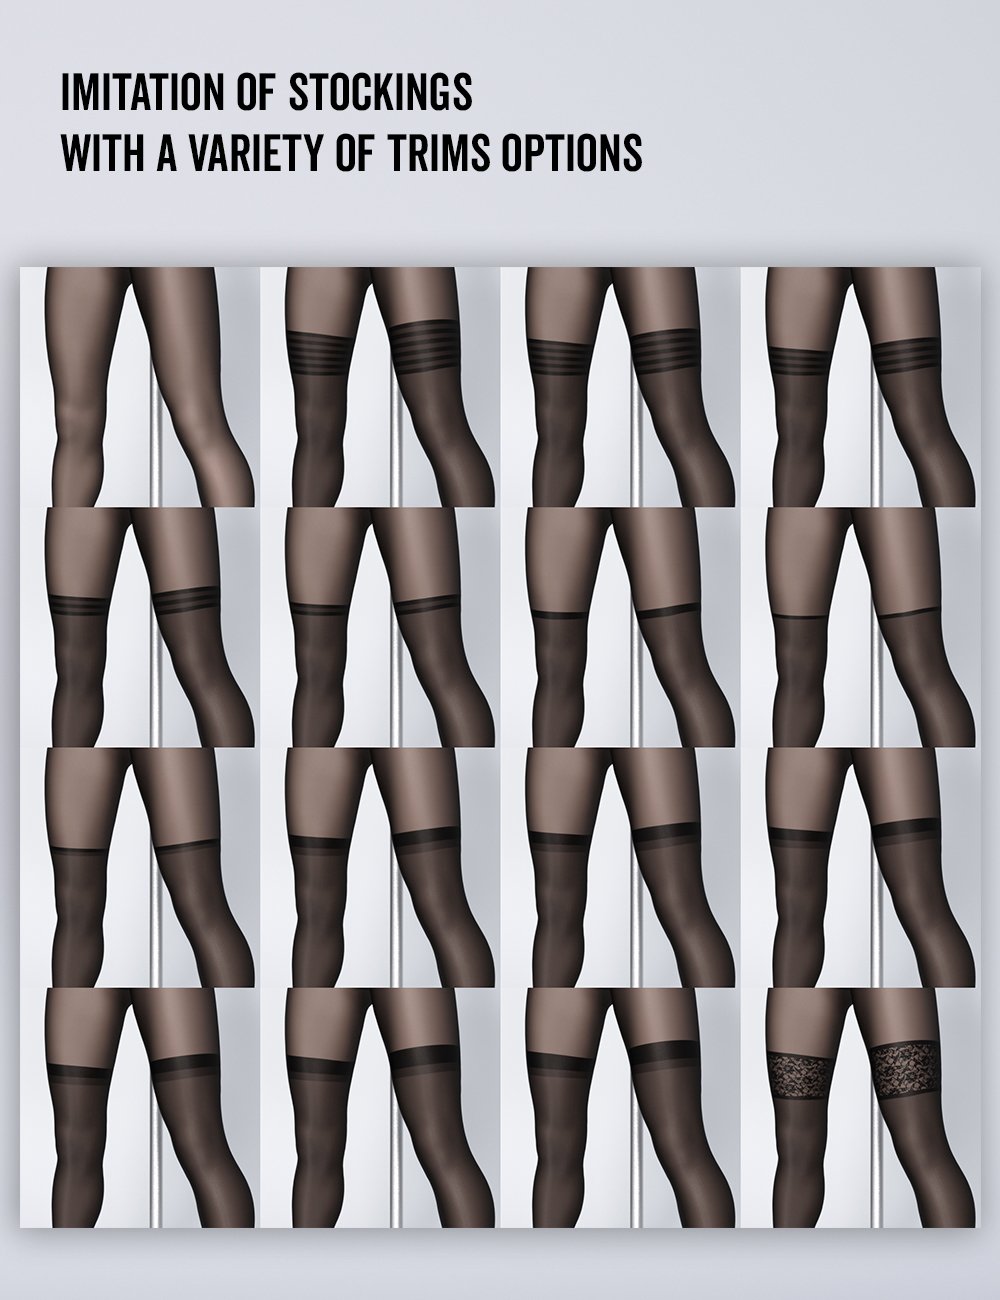 Lali's Low-Waist Tights for Genesis 8.1 Female by: Lali Kamala, 3D Models by Daz 3D